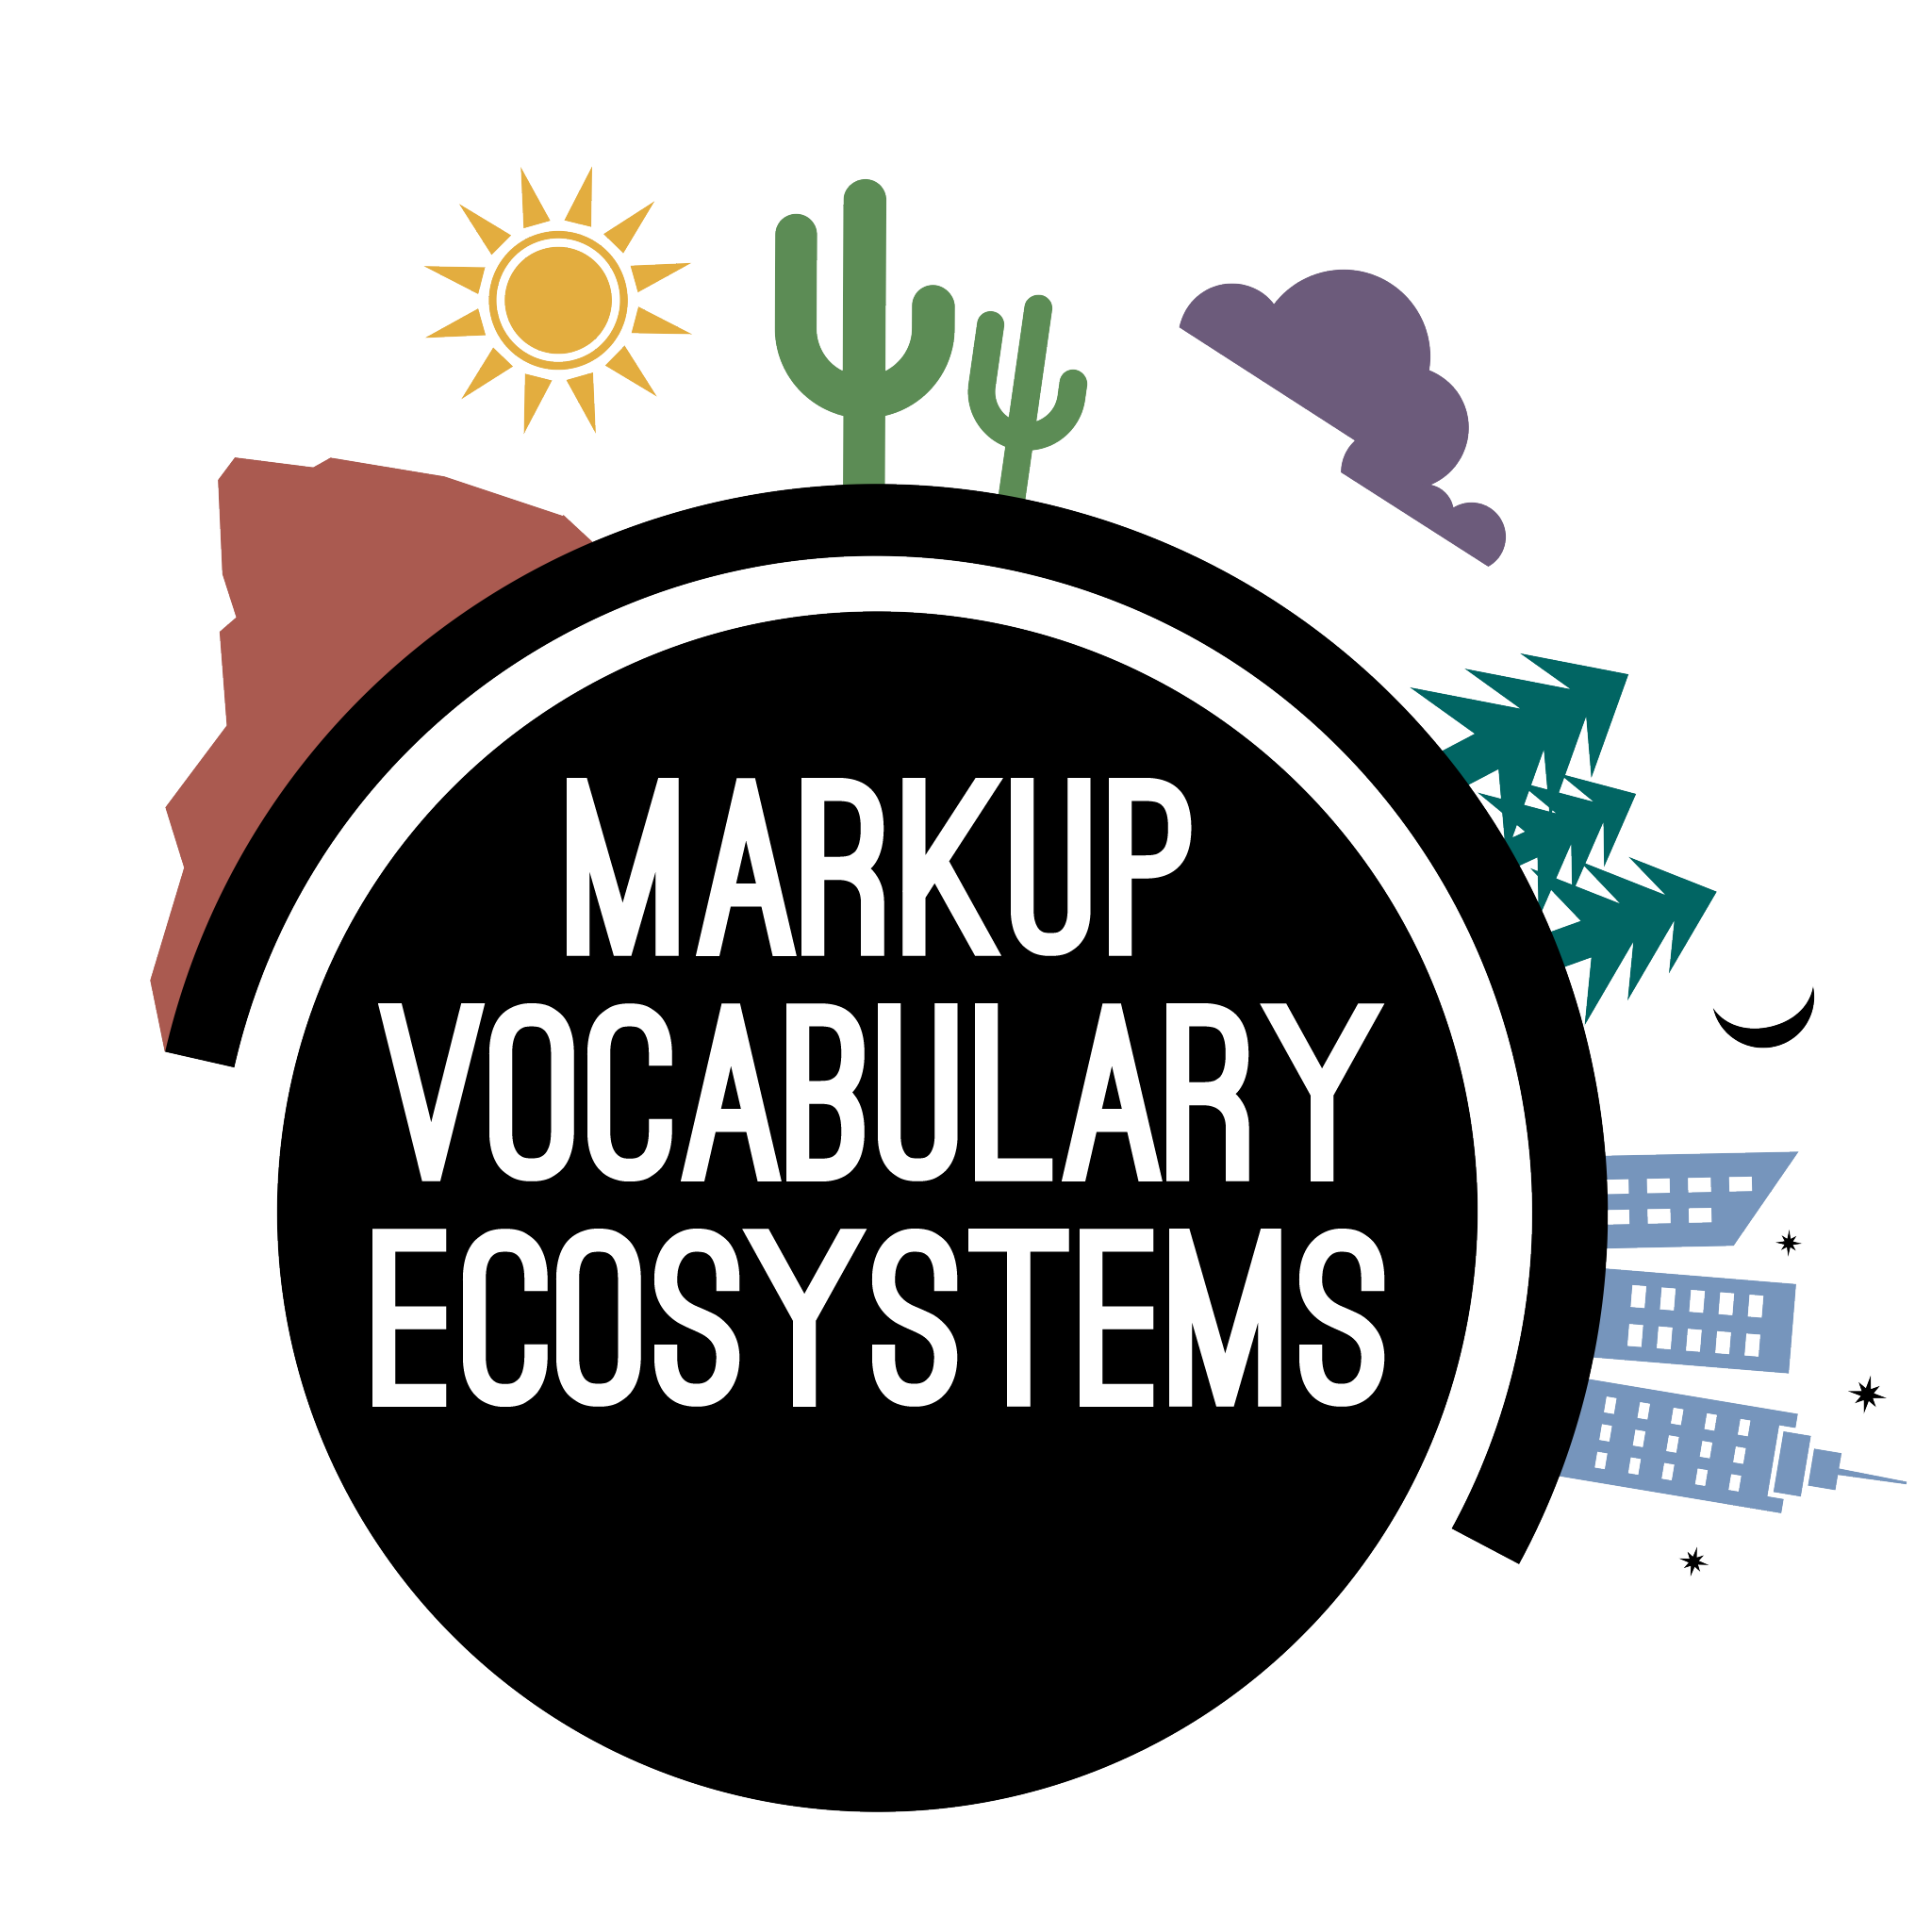 Symposium on Markup Vocabulary Ecosystems